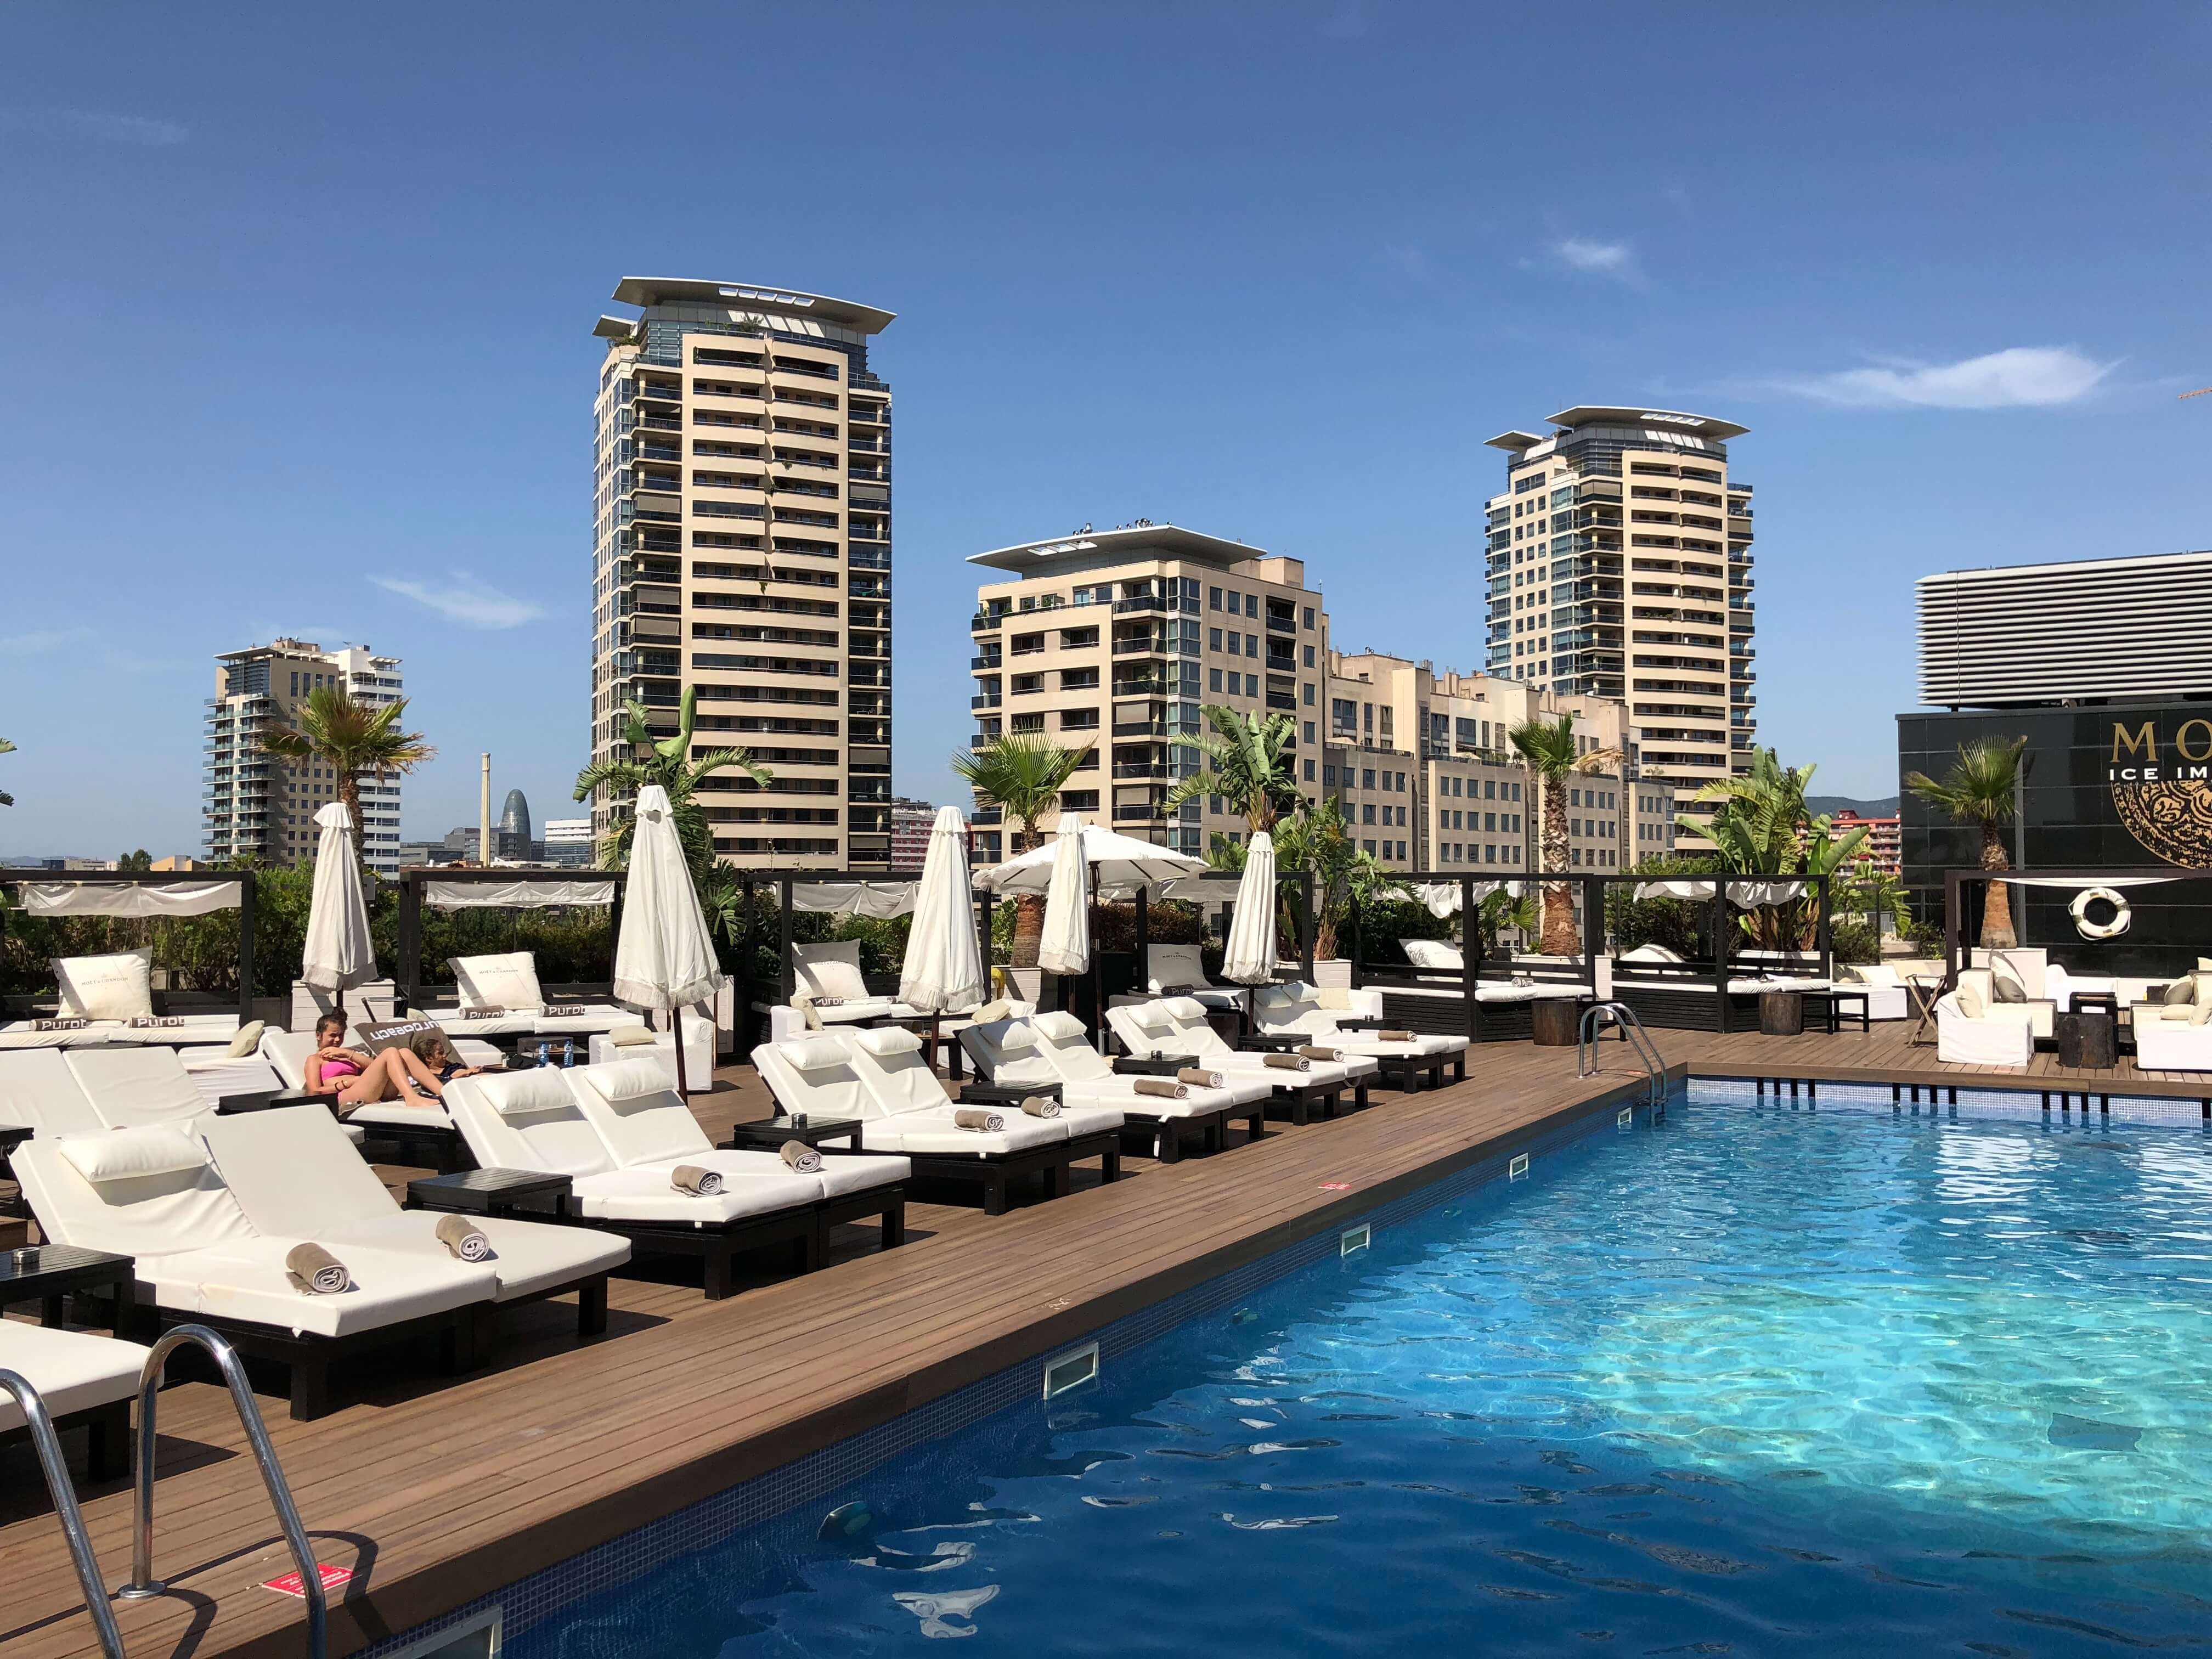 Hilton Diagonal Mar Barcelona Hotels Review Pool Area Upon Boarding